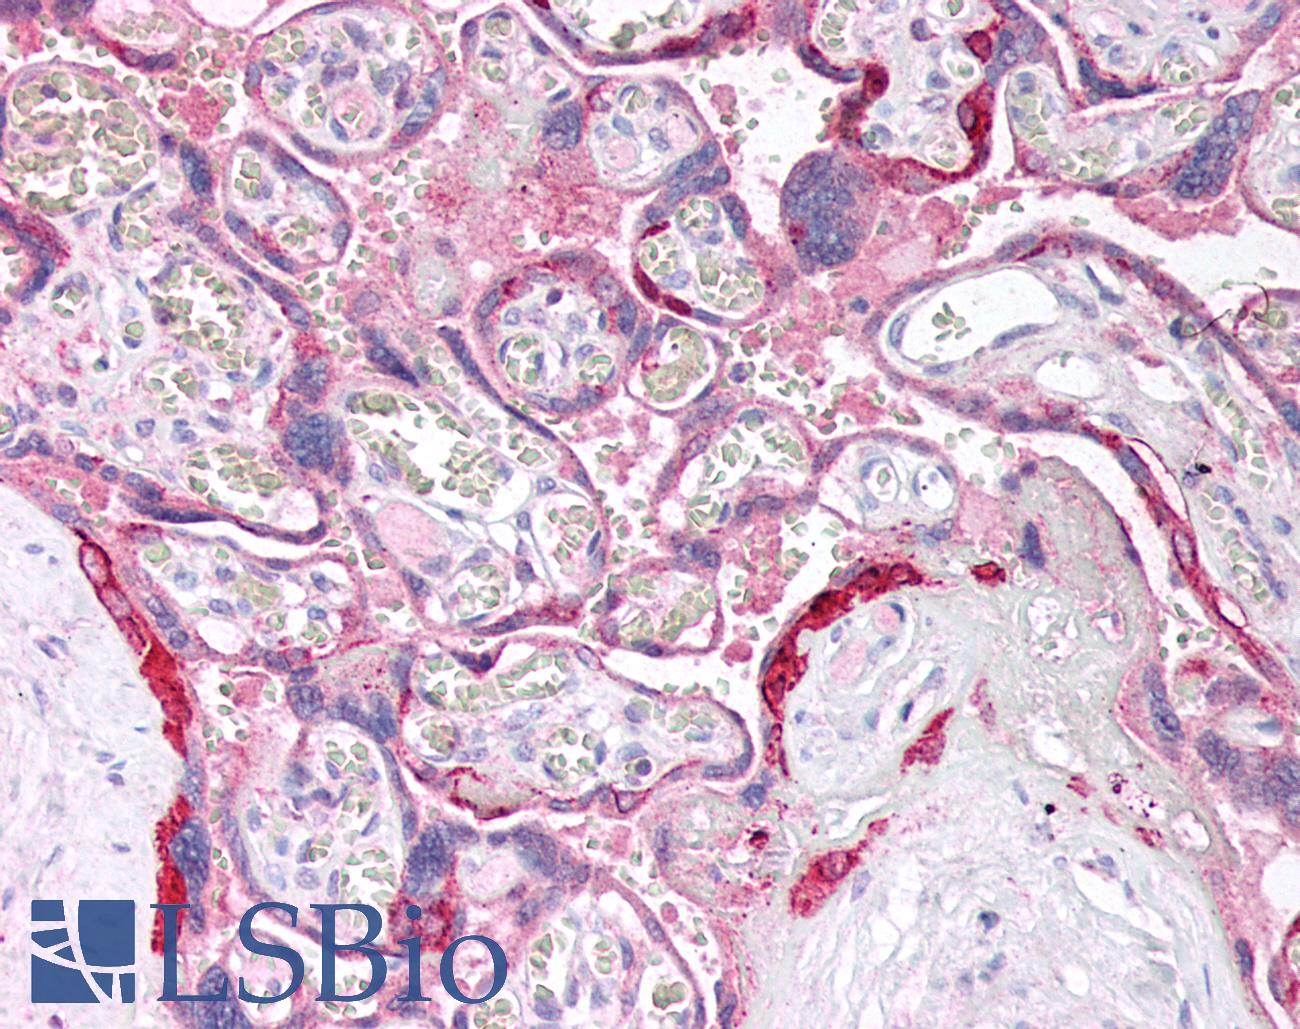 ANXA8L1 Antibody - Human Placenta: Formalin-Fixed, Paraffin-Embedded (FFPE)